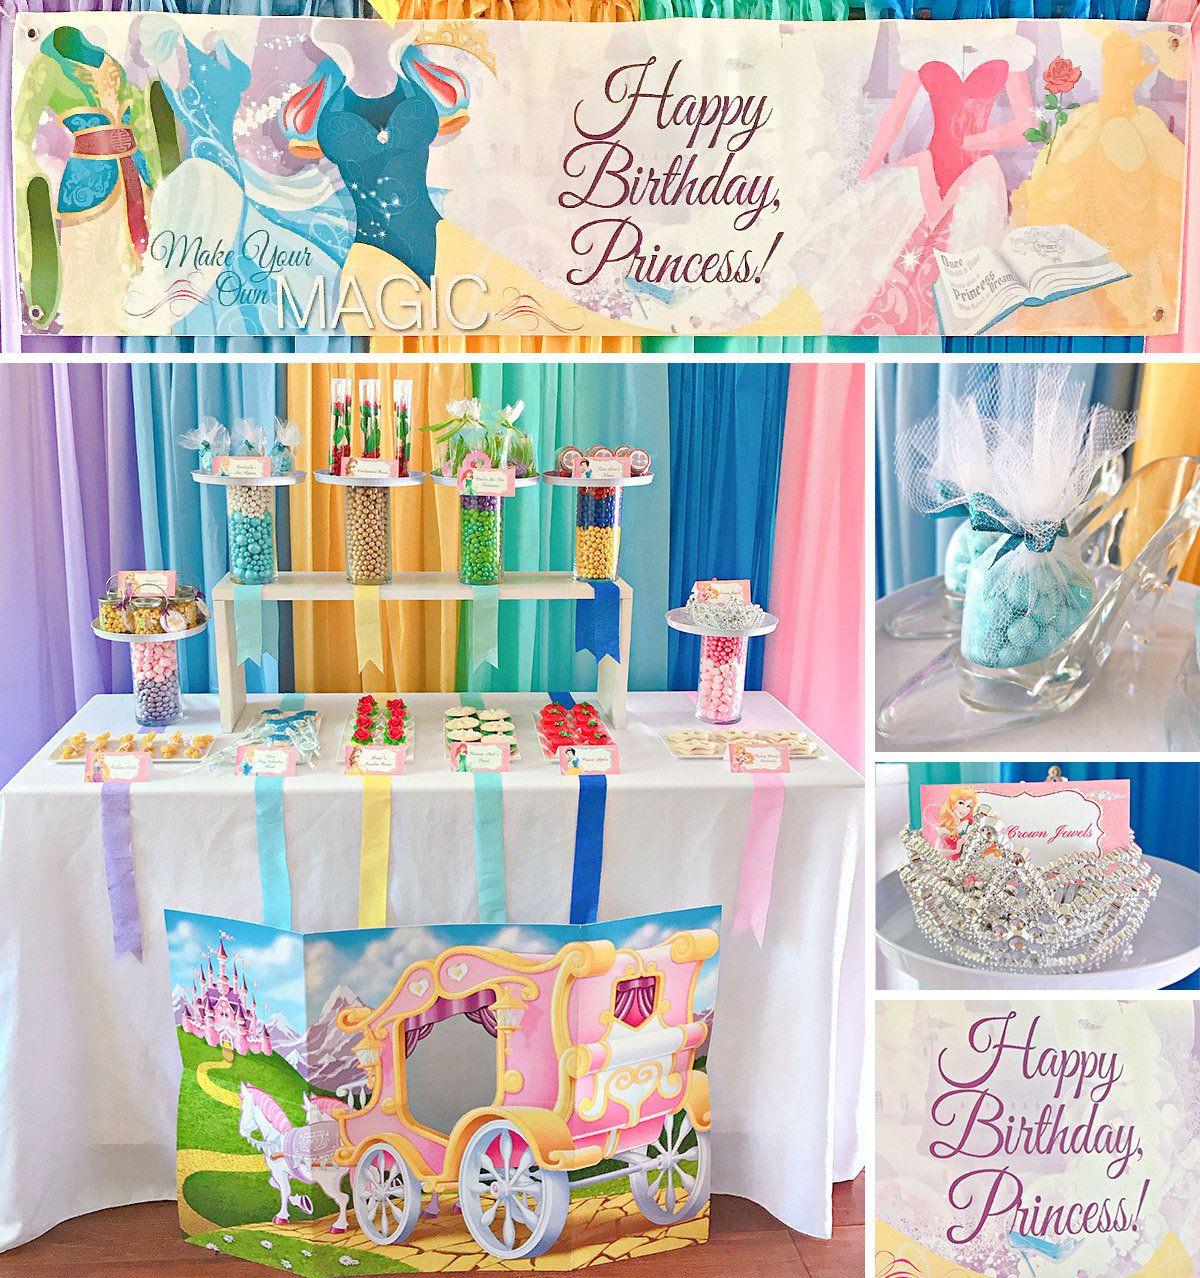 Best ideas about Disney Princess Birthday Party Ideas
. Save or Pin Disney Princess Party Ideas Now.